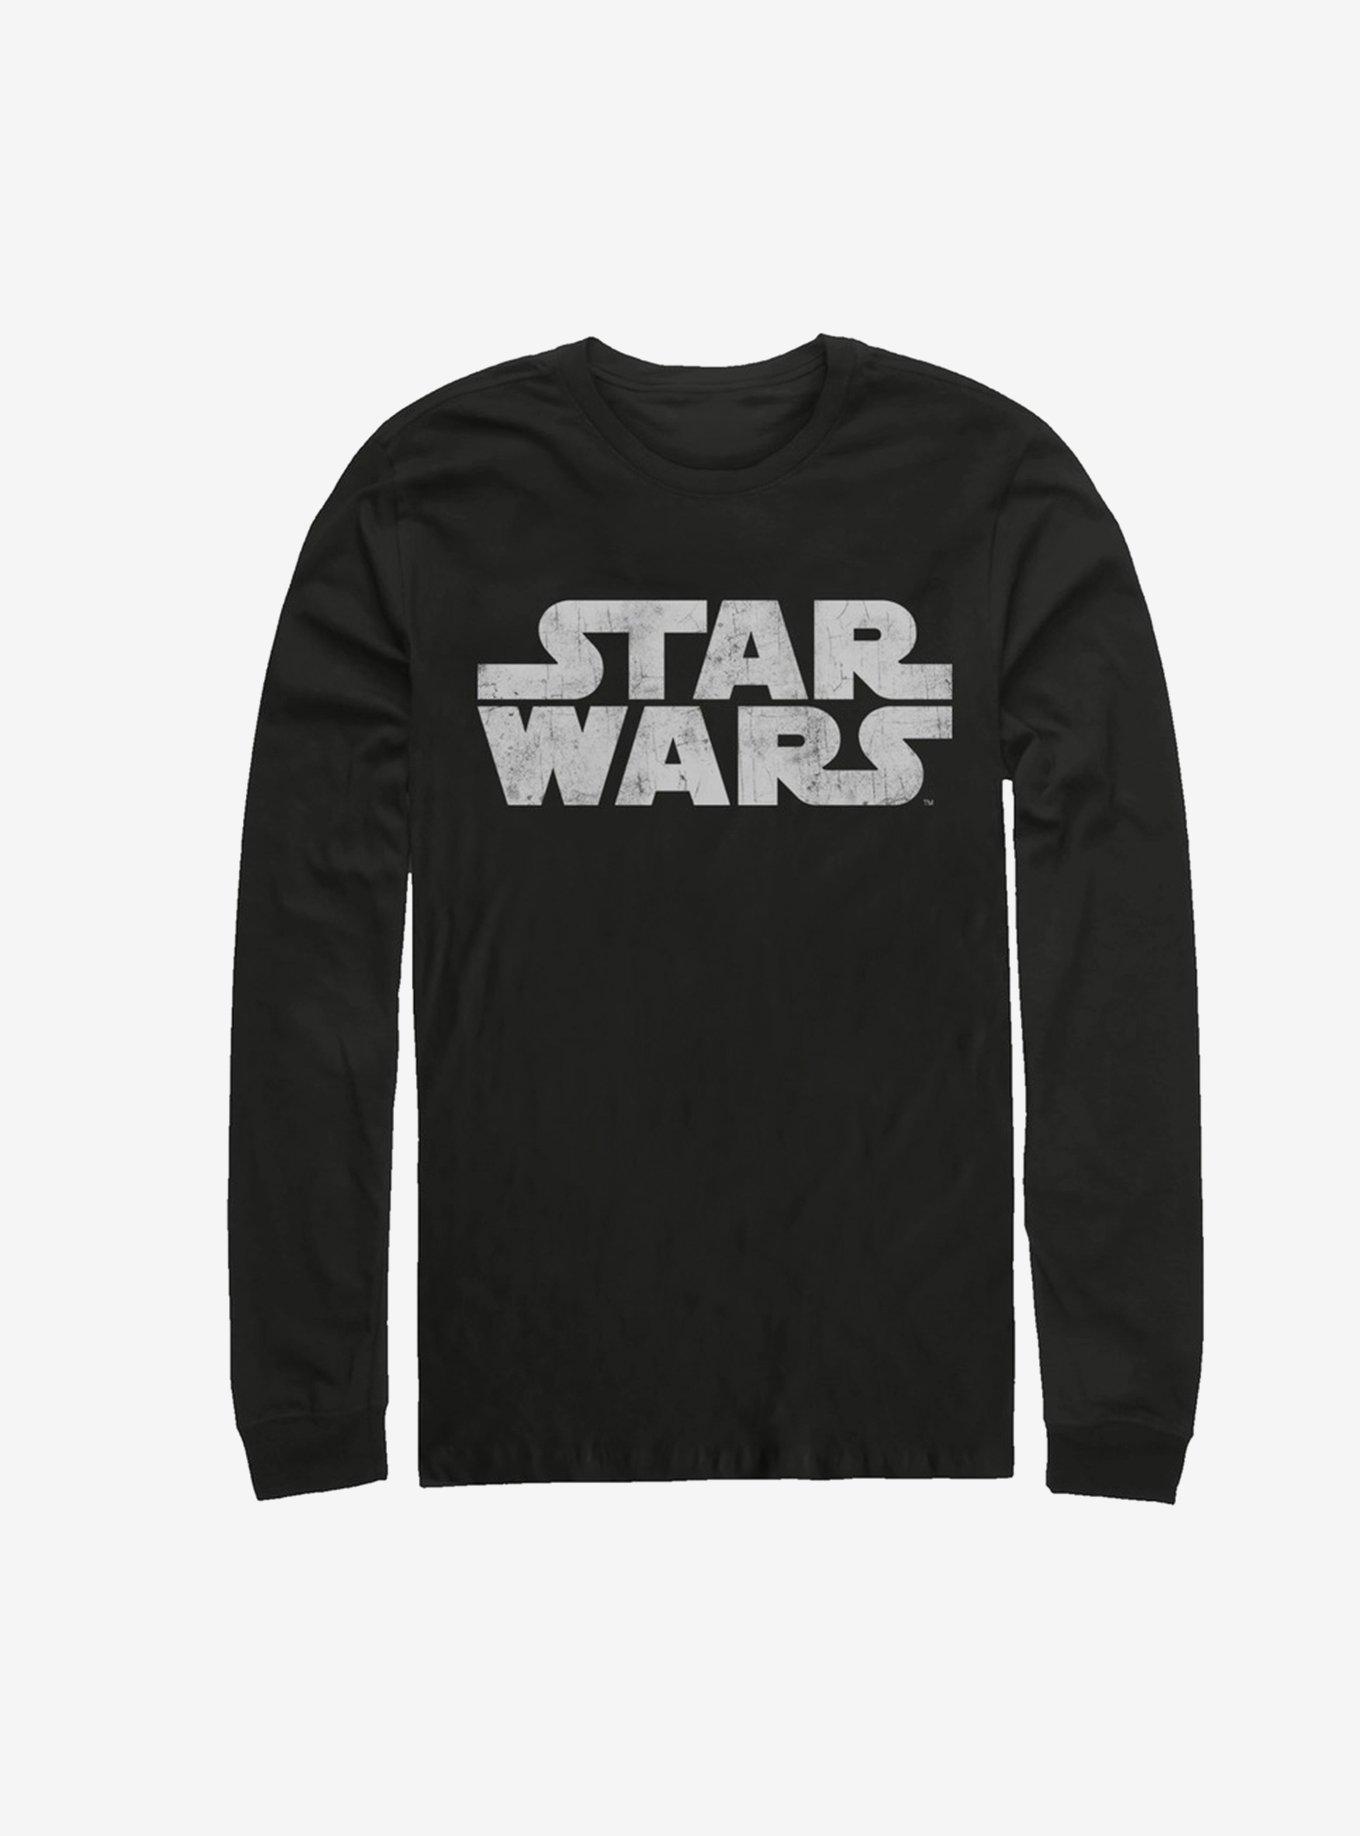 Star Wars Simplest Logo Long-Sleeve T-Shirt, BLACK, hi-res